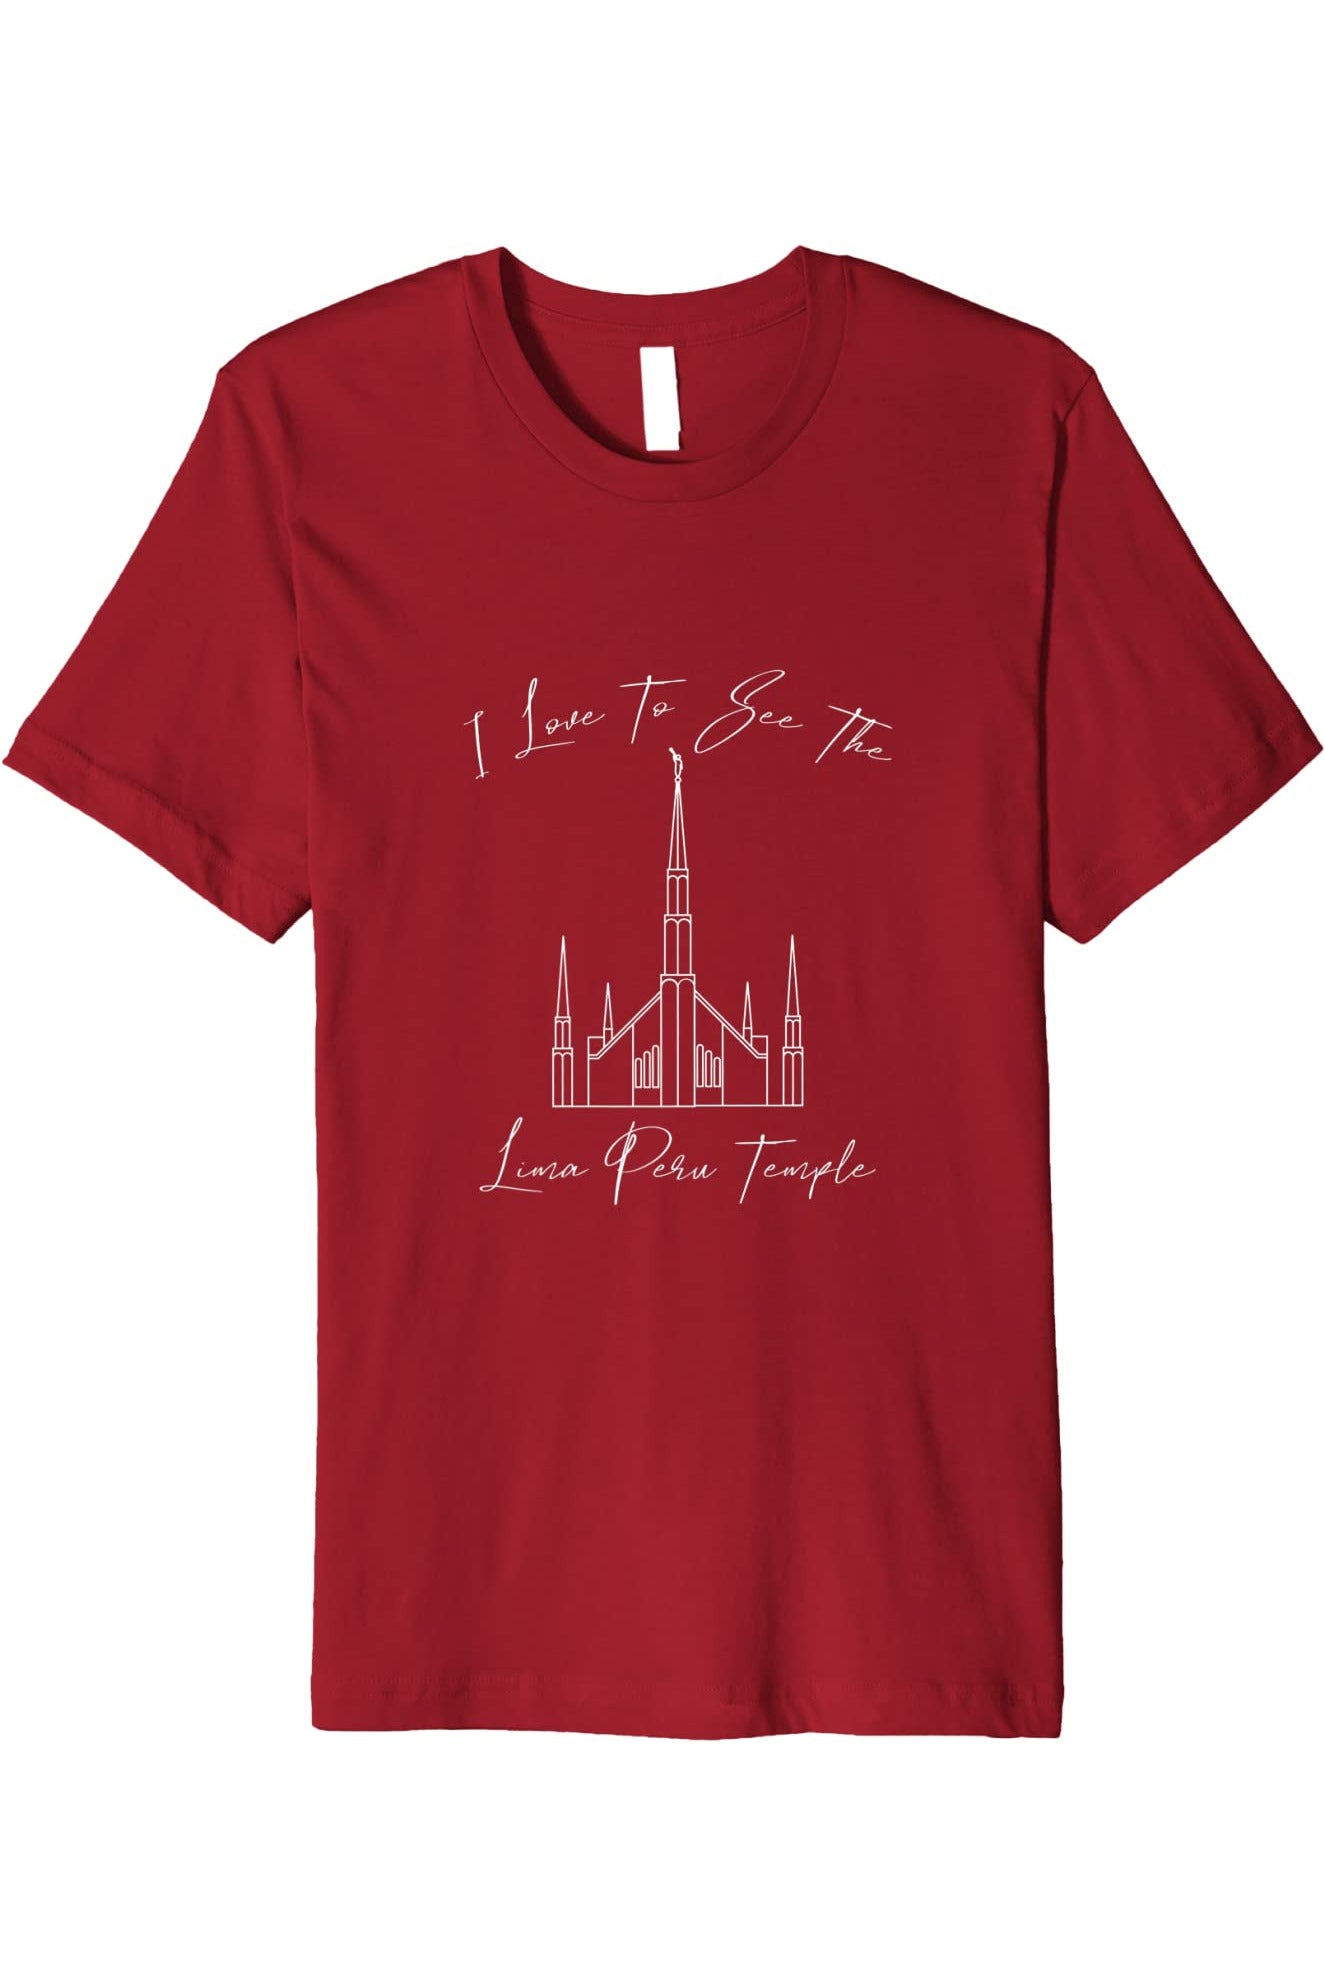 Lima Peru Temple T-Shirt - Premium - Calligraphy Style (English) US